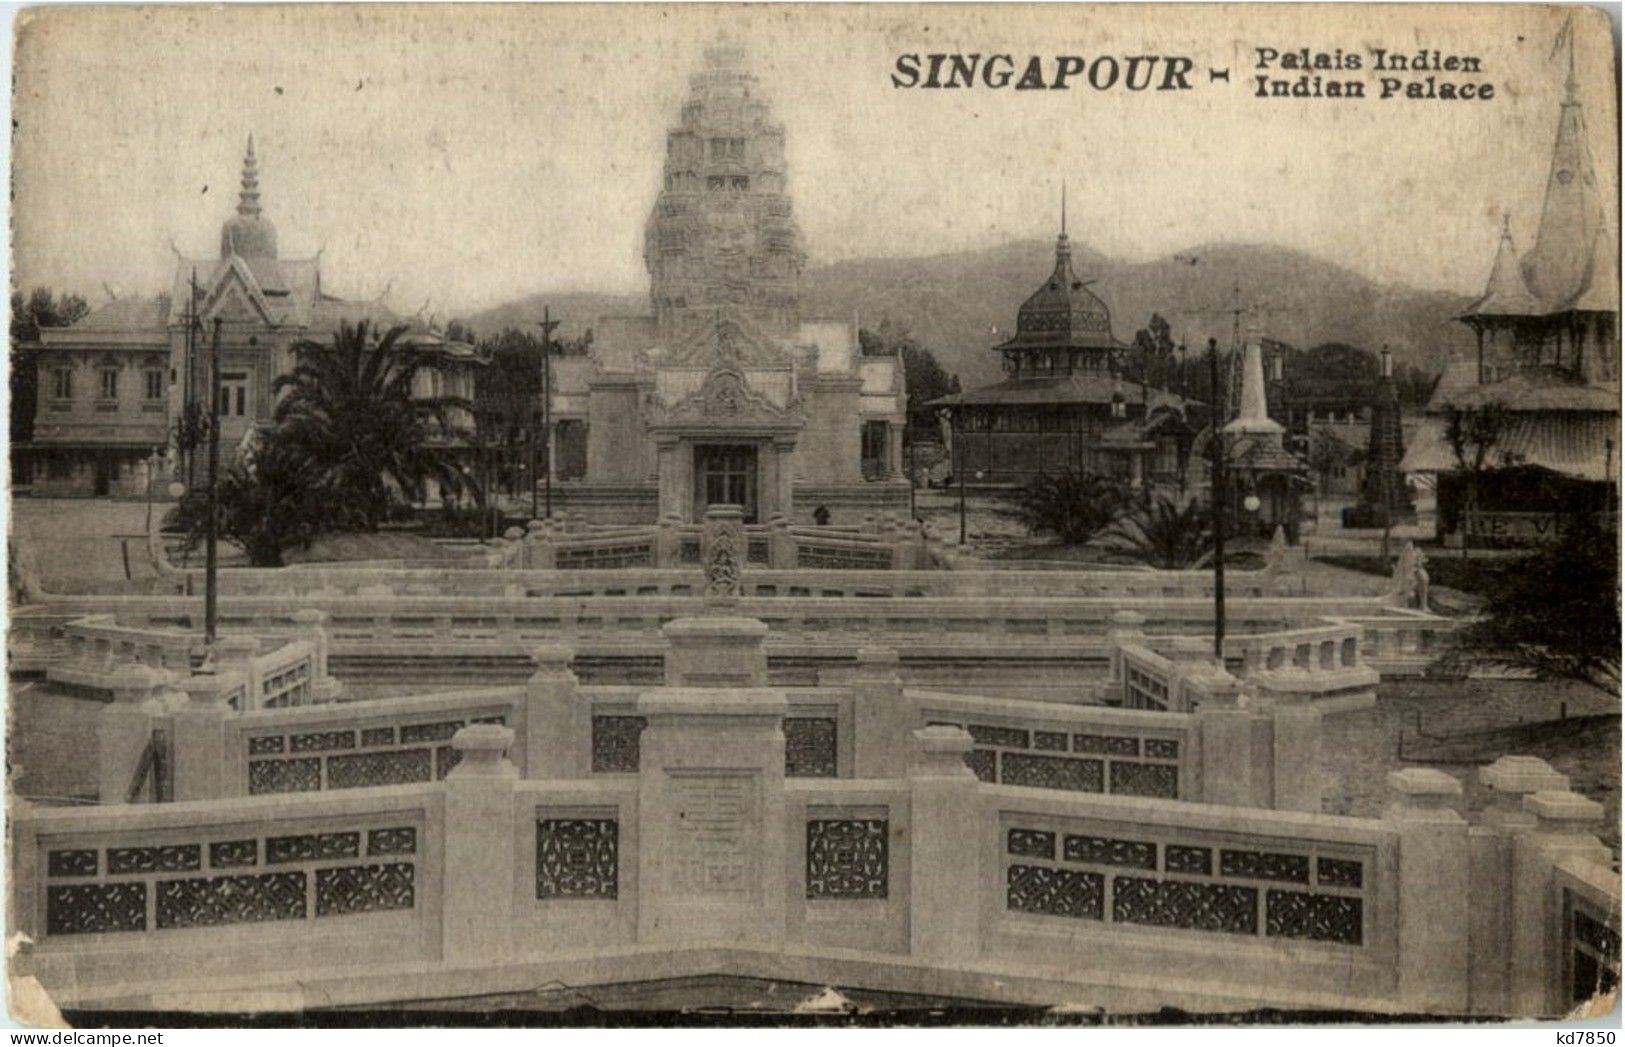 Singapore - Indian Palace - Singapour